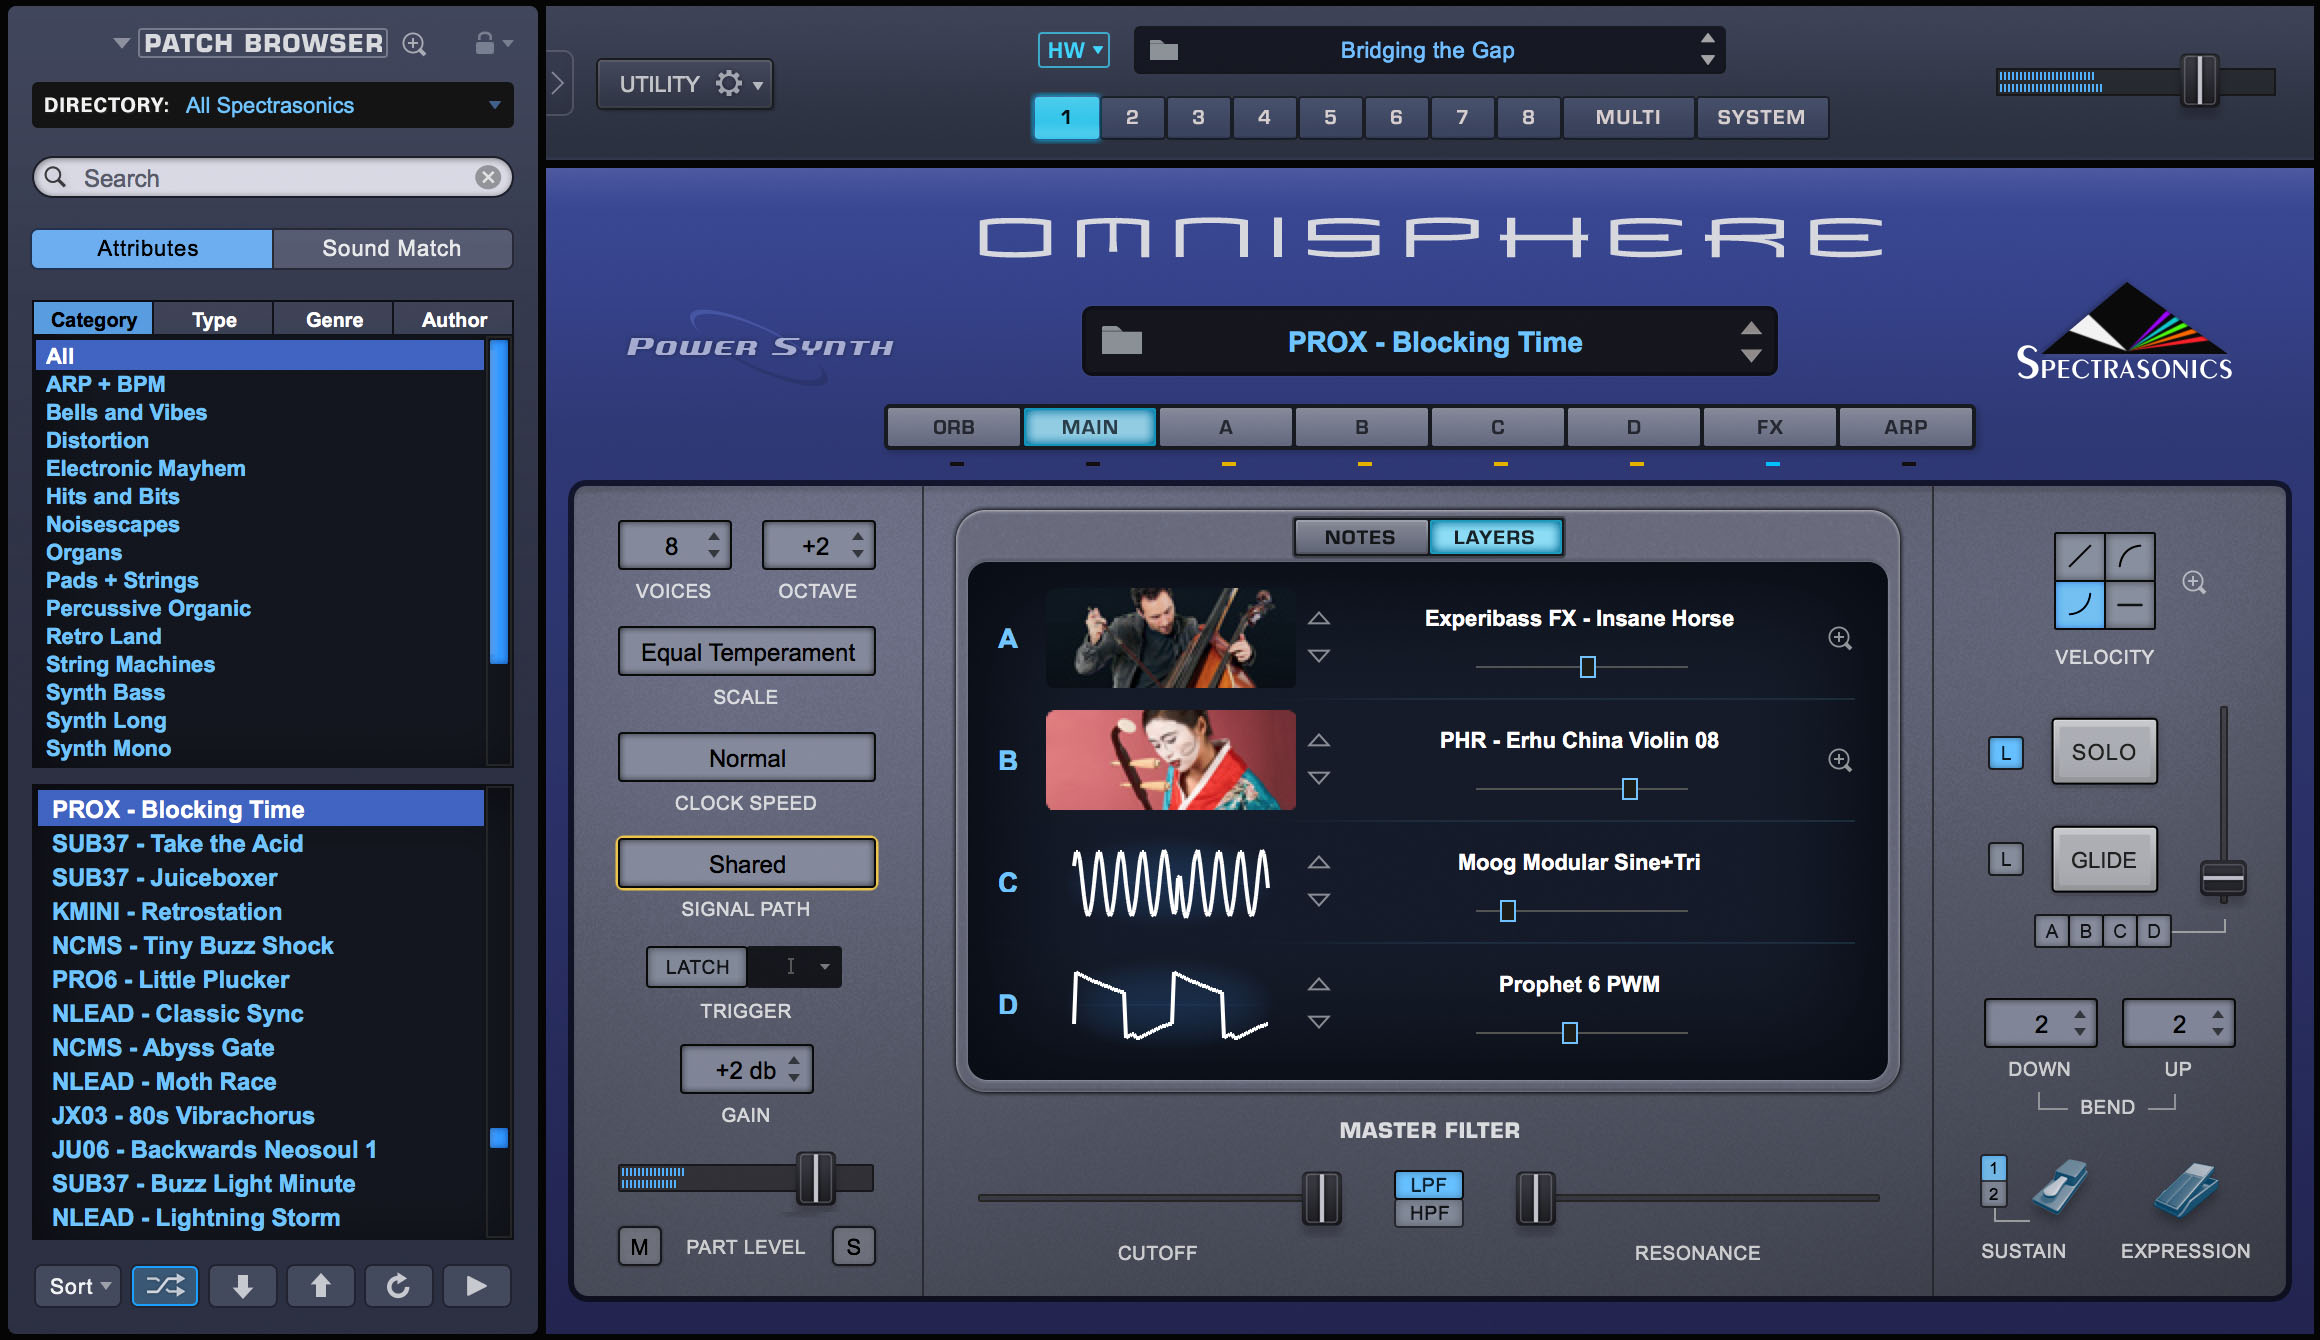 free download omnisphere windows